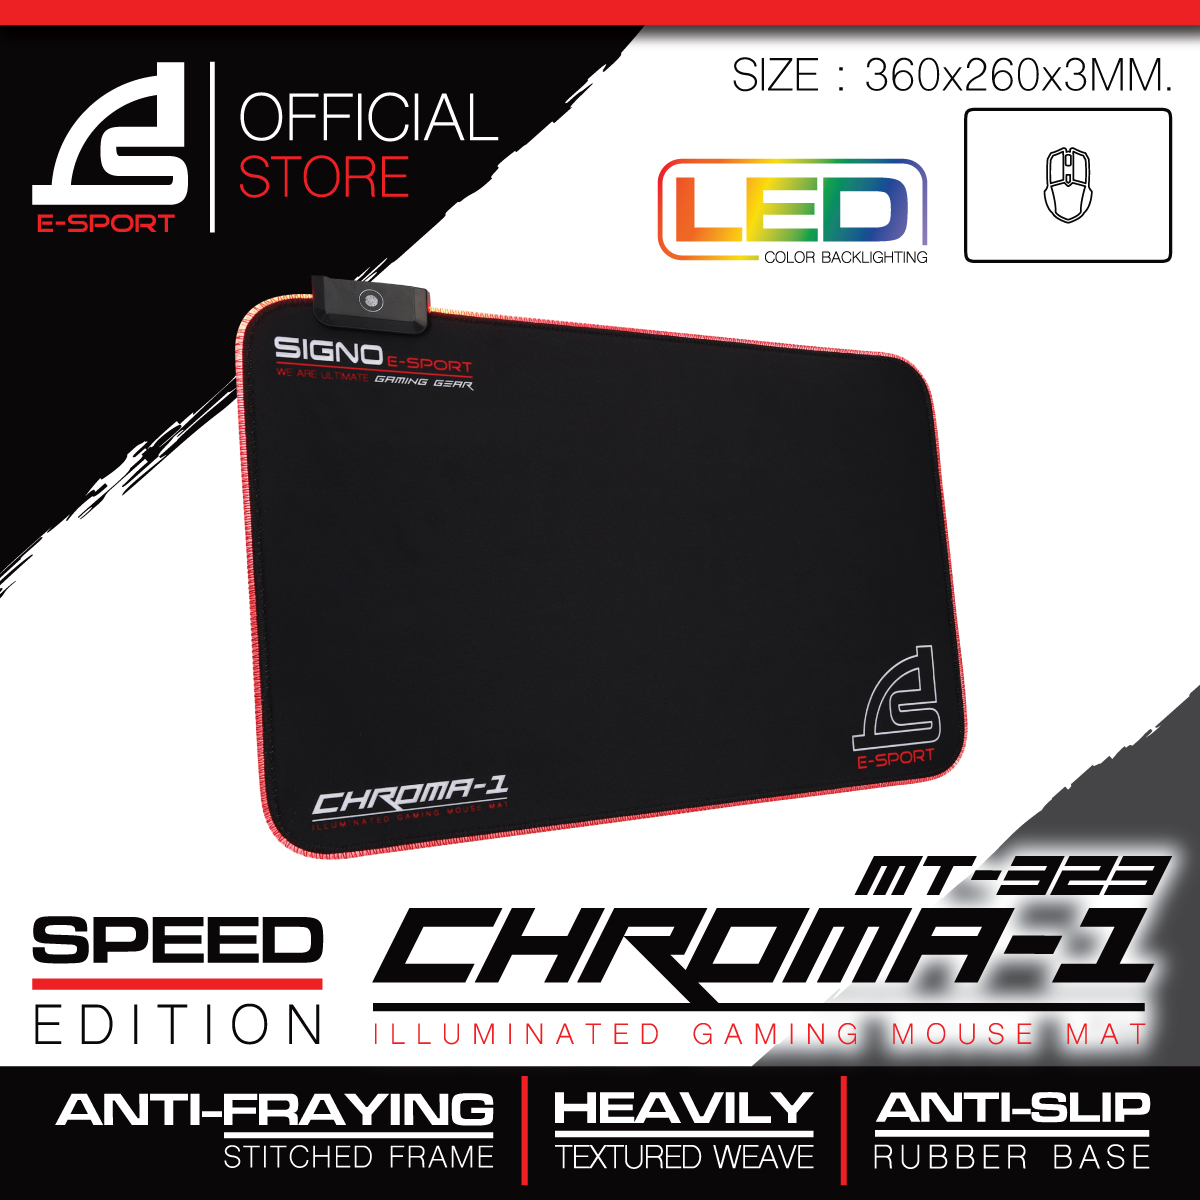 SIGNO E-Sport CHROMA-1 LED Gaming Mouse Mat รุ่น MT-323 (Speed Edition) (แผ่นรองเมาส์ เกมส์มิ่ง)